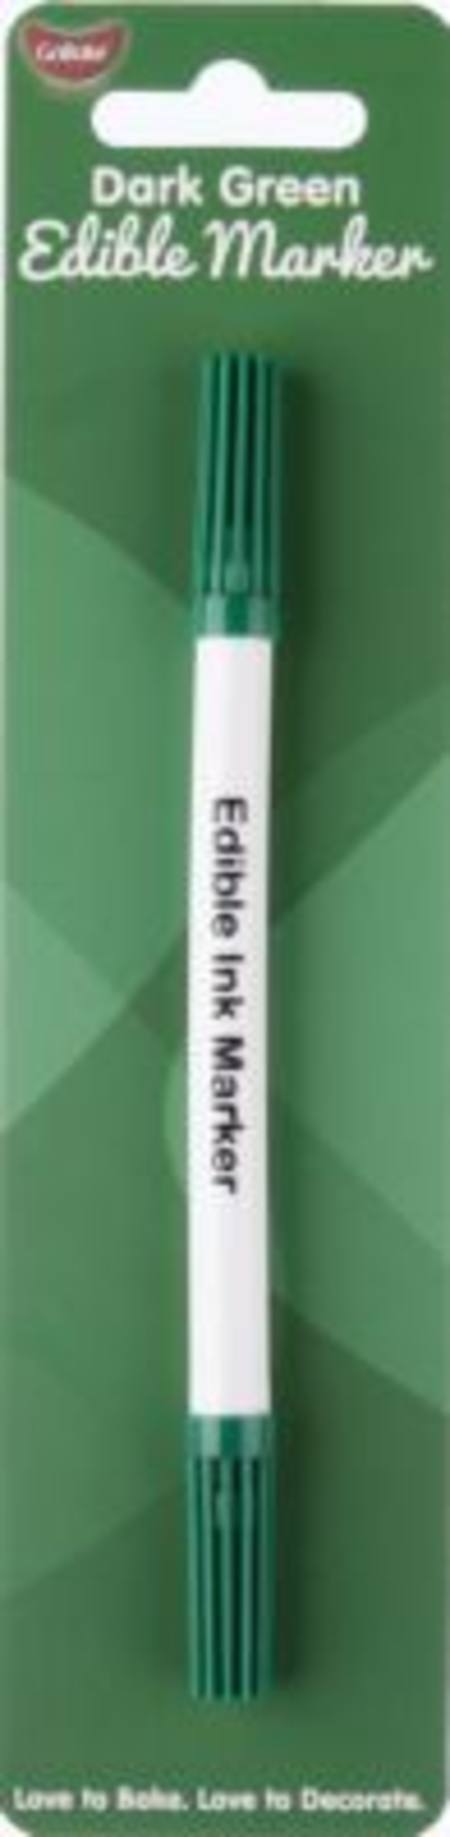 Edible Marker Pen Dark Green